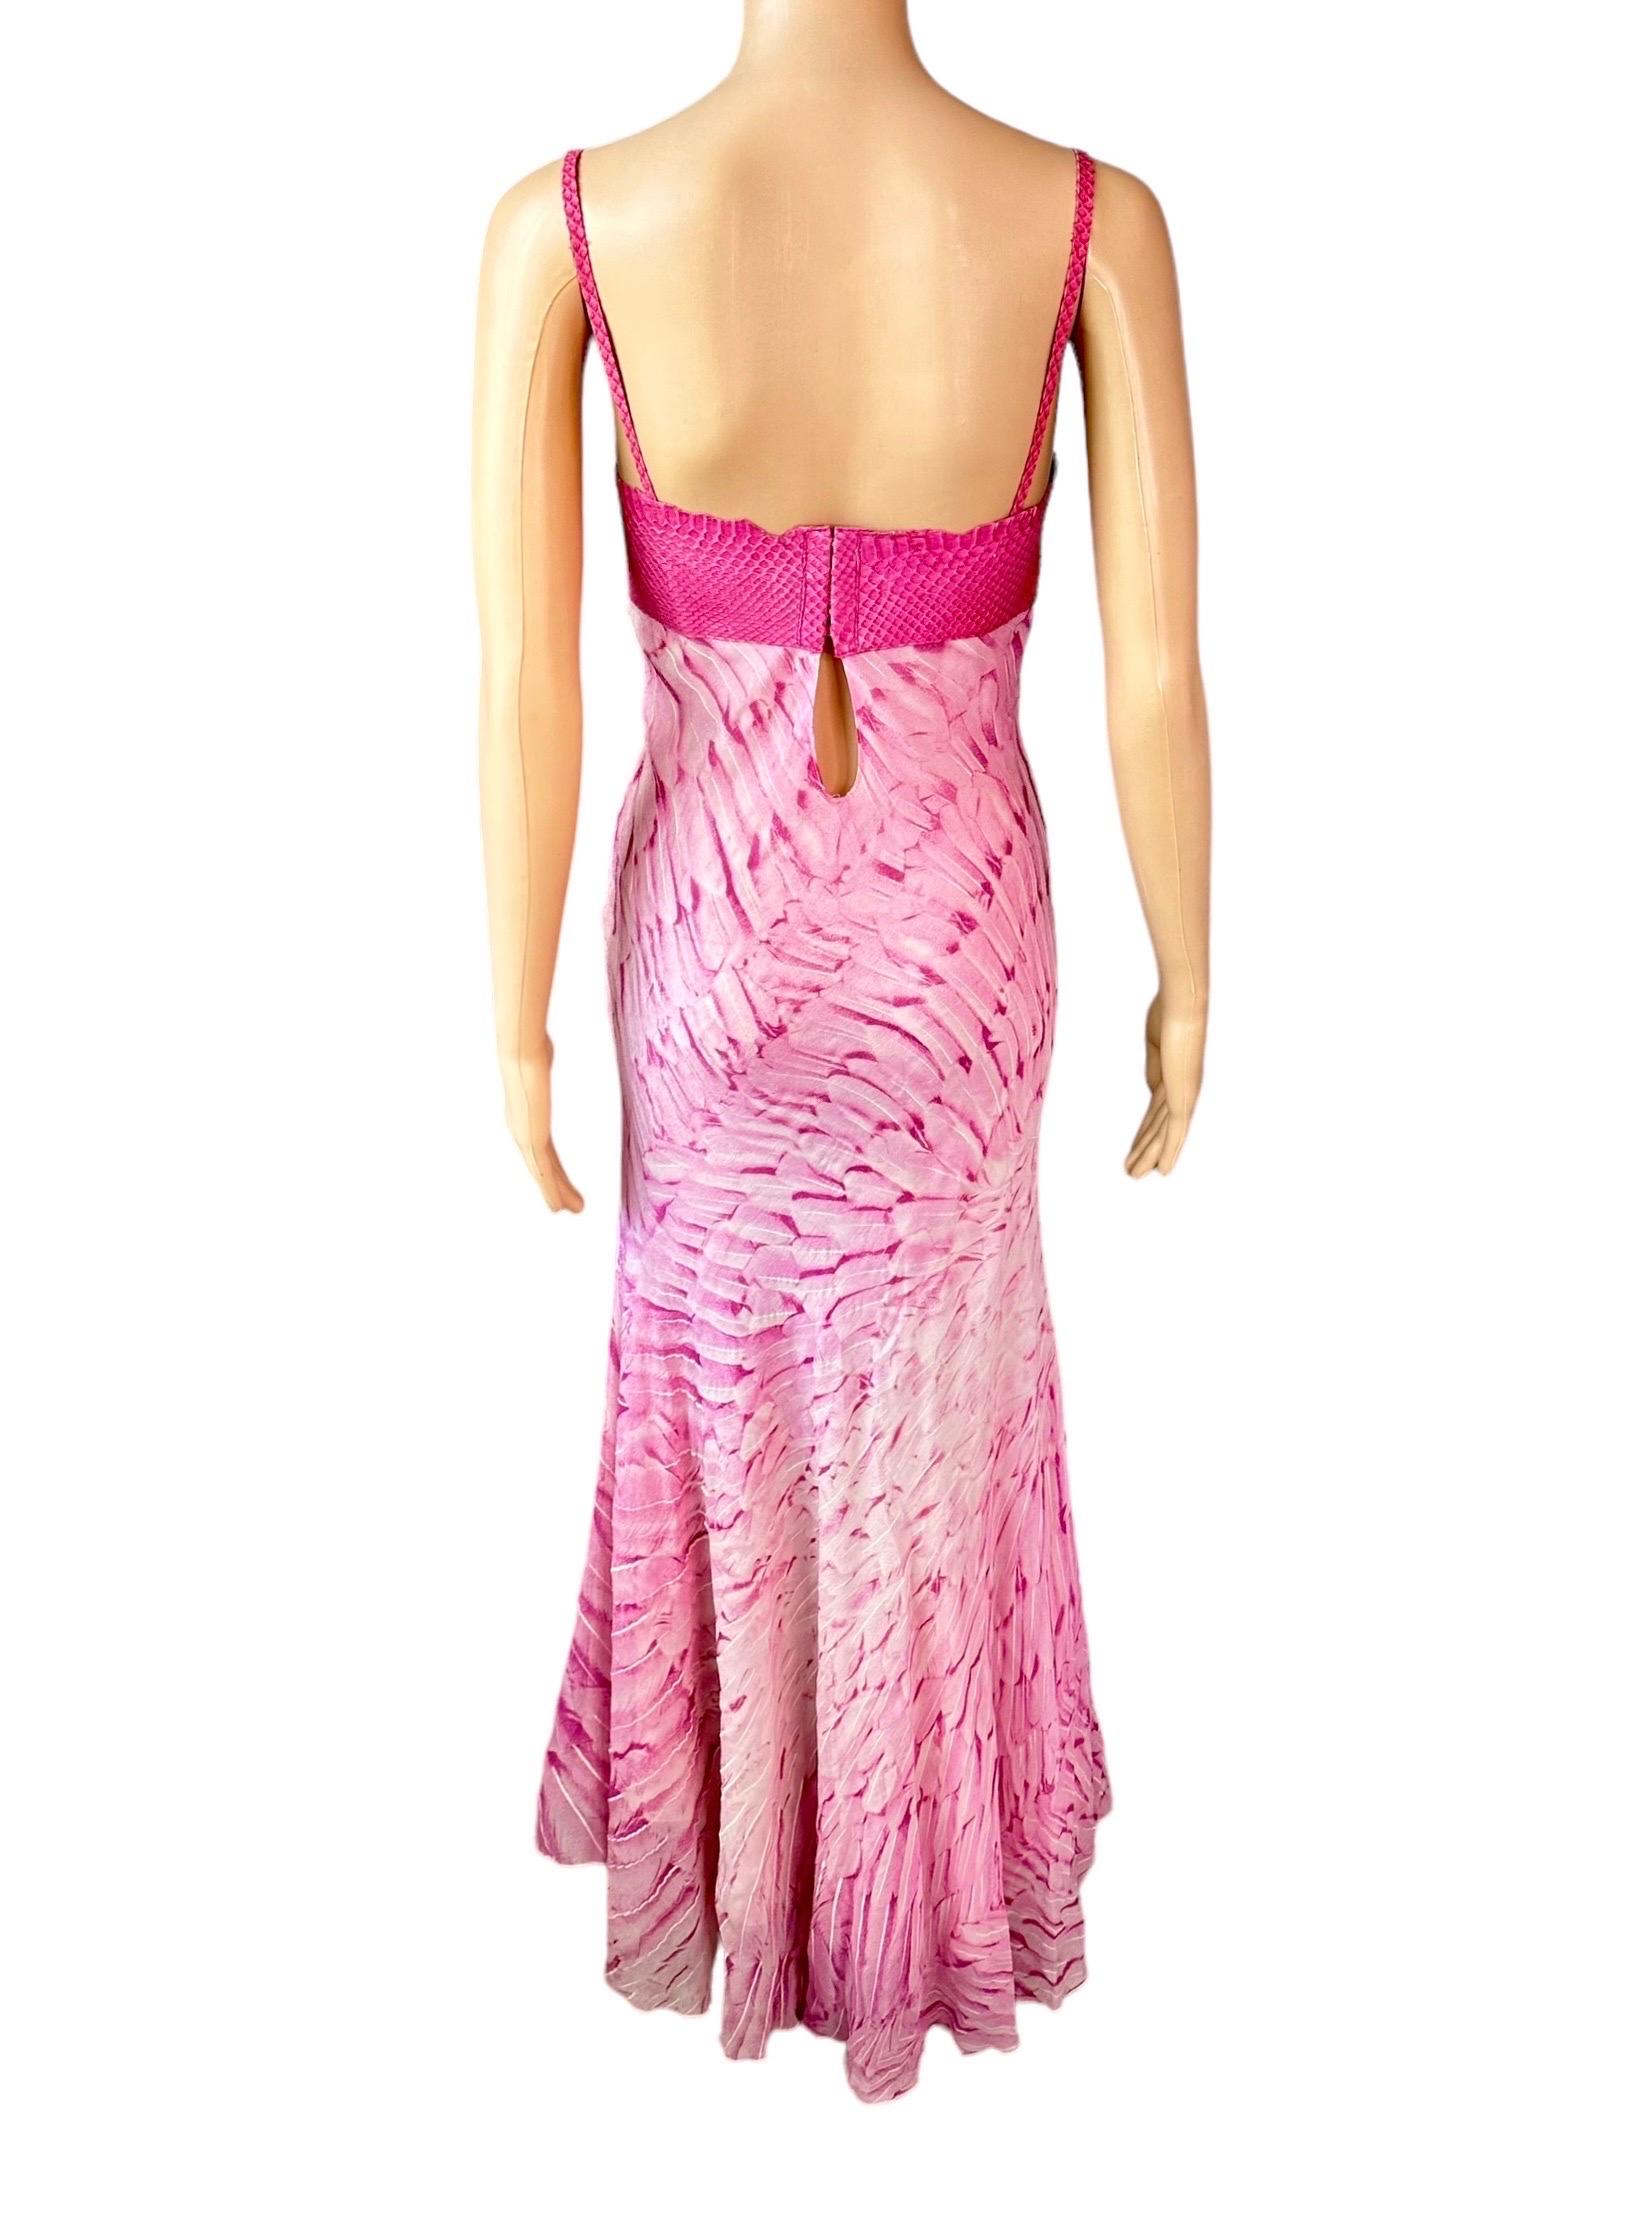 Roberto Cavalli S/S 1999 Runway Snakeskin Feather Print Silk Maxi Evening Dress For Sale 4